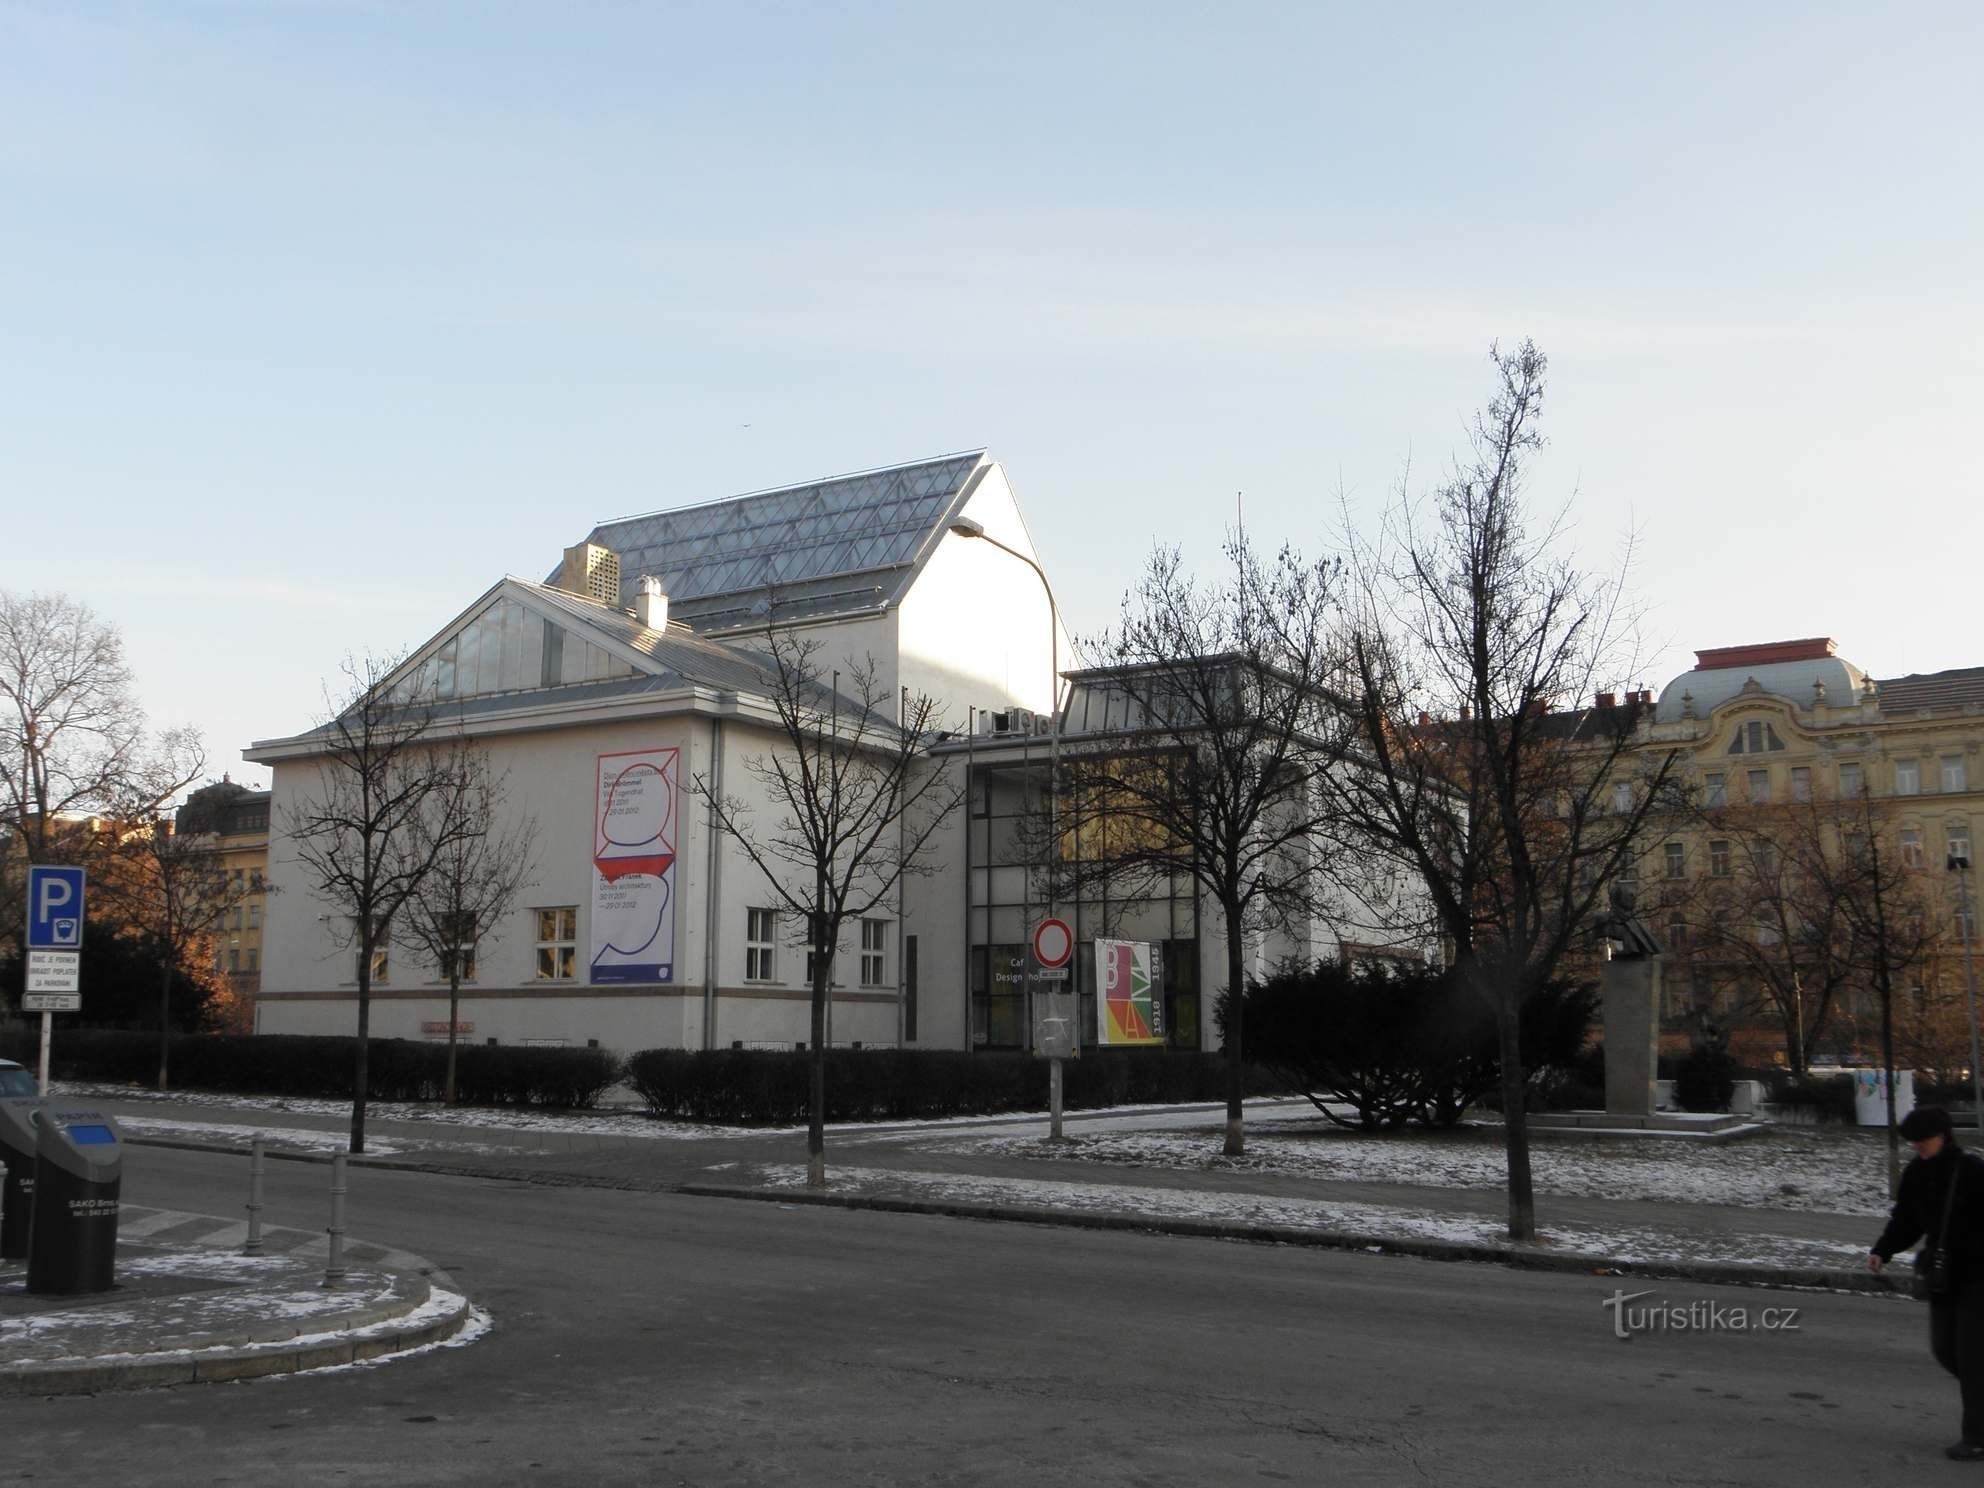 House of Art i byen Brno - 10.2.2012. februar XNUMX